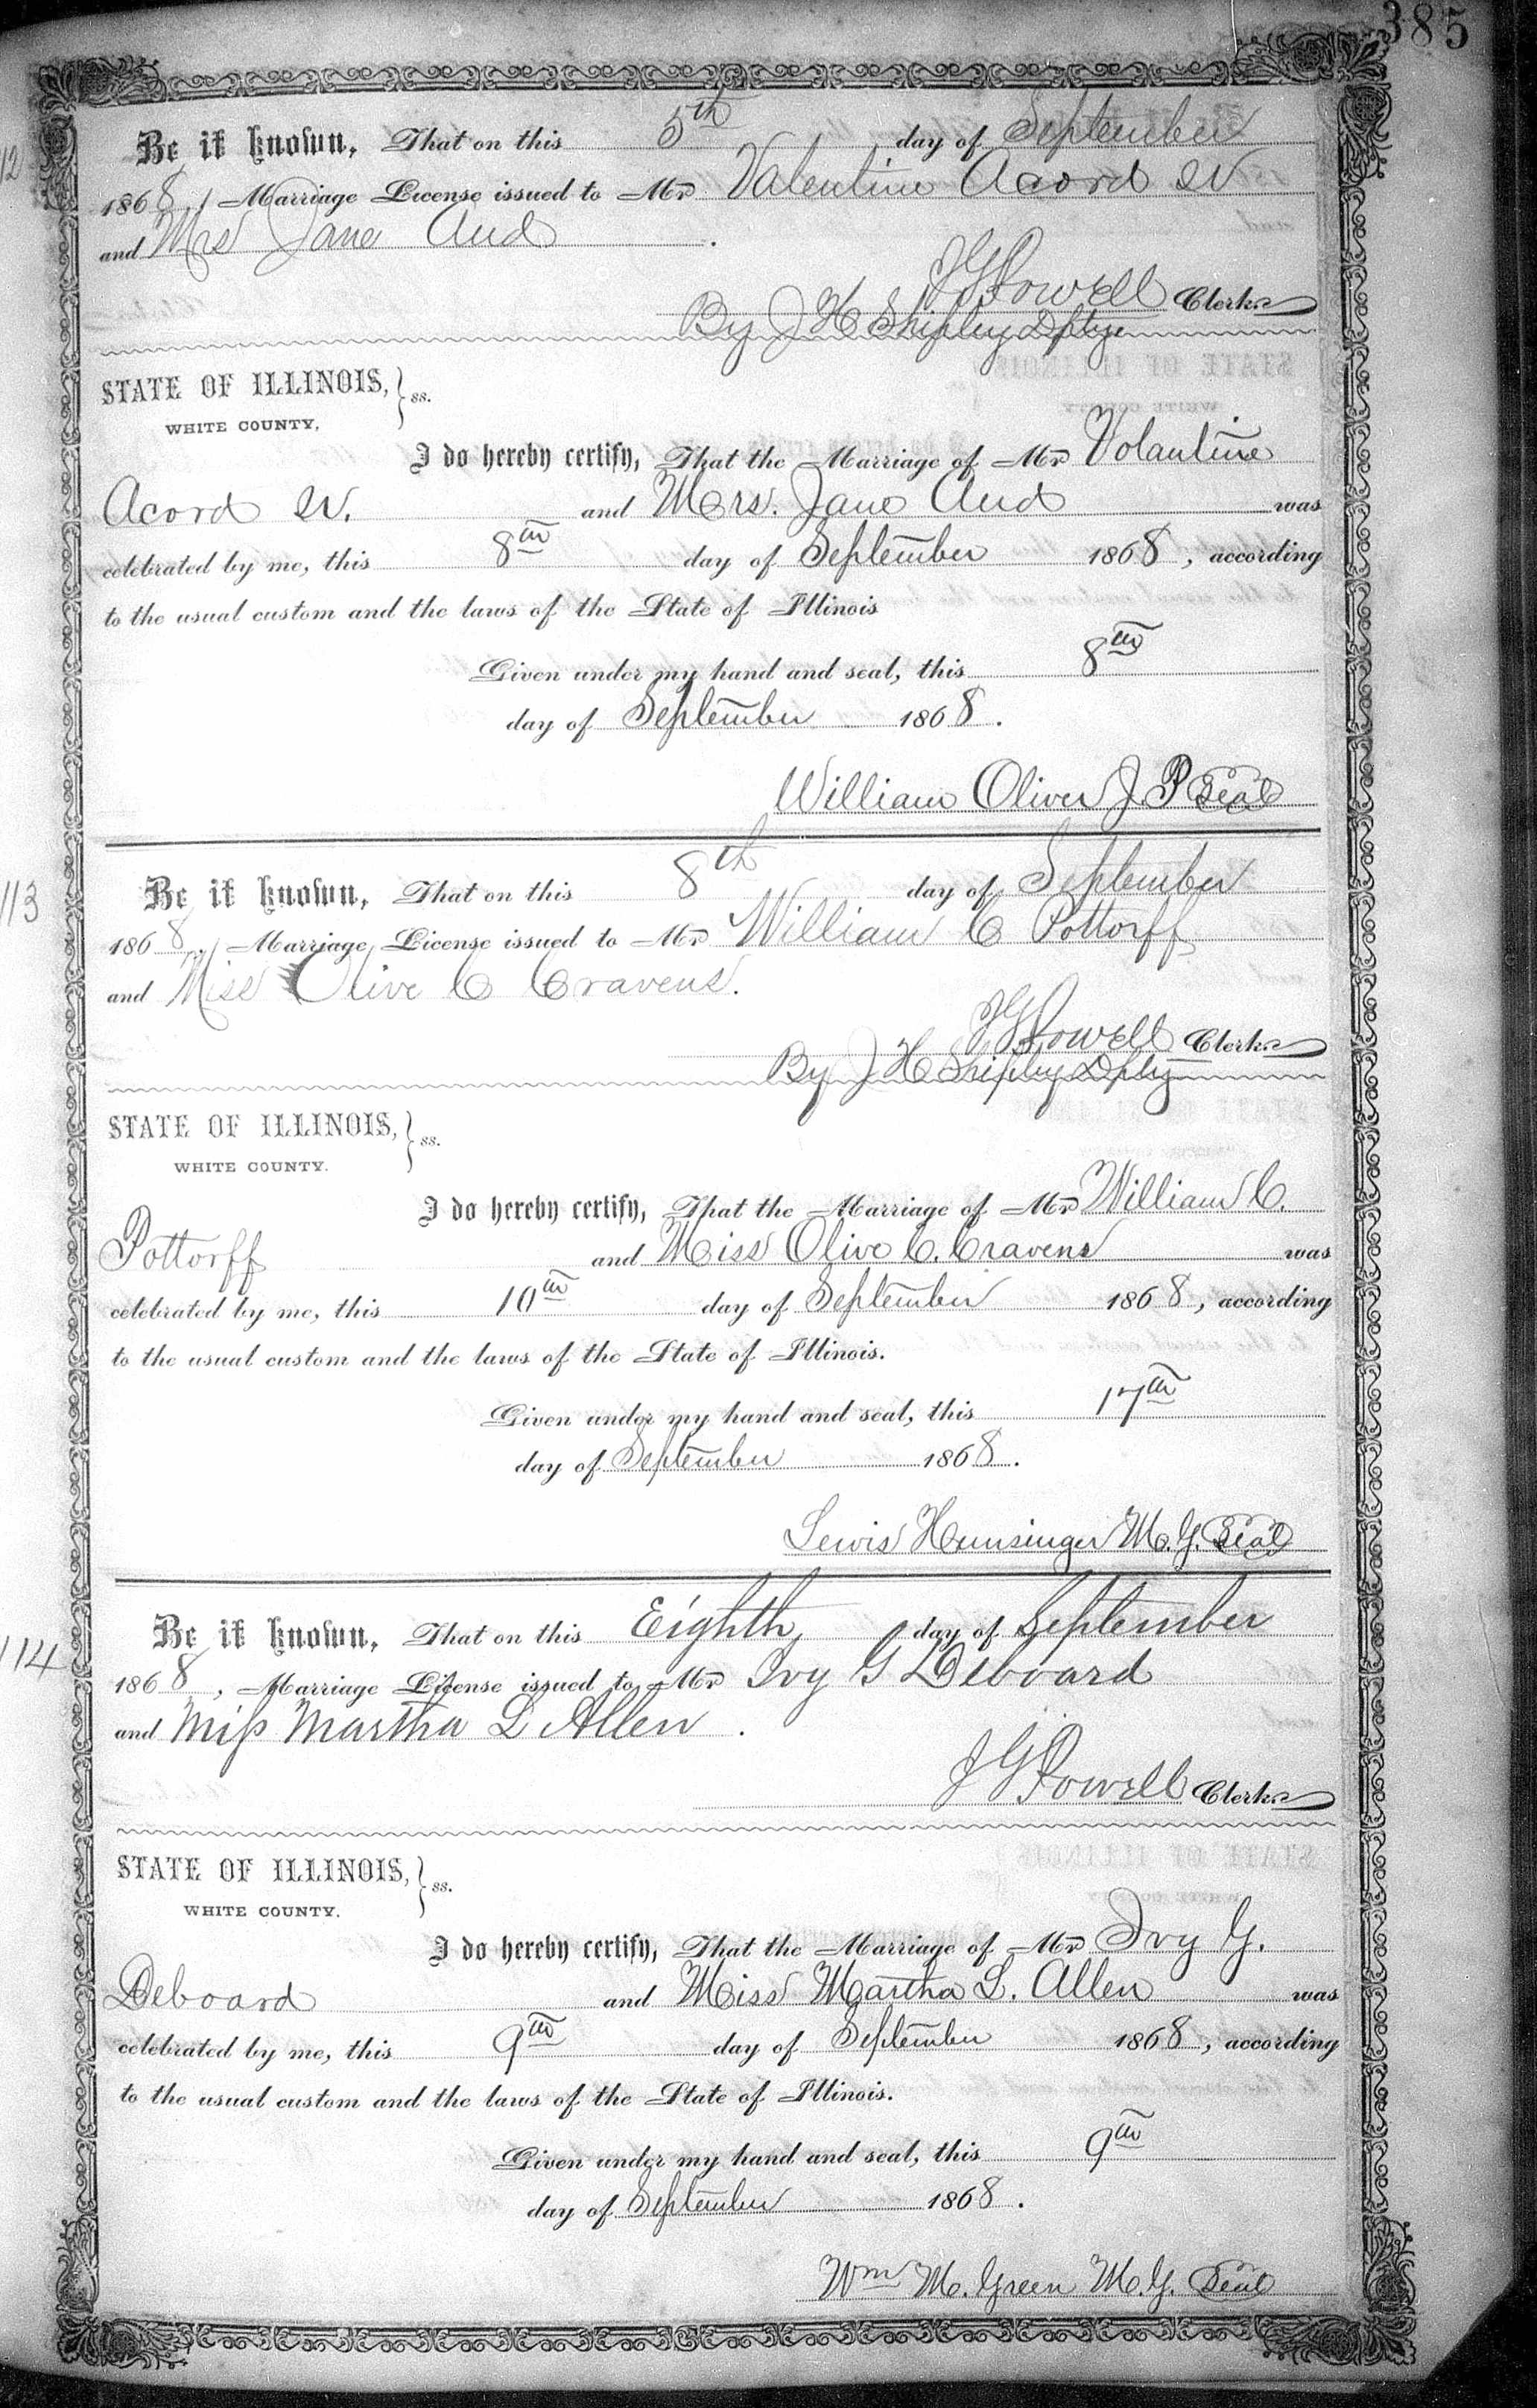 Marriage, Iva G. Deboard-Martha Allen, 9 September 1868, White Co IL